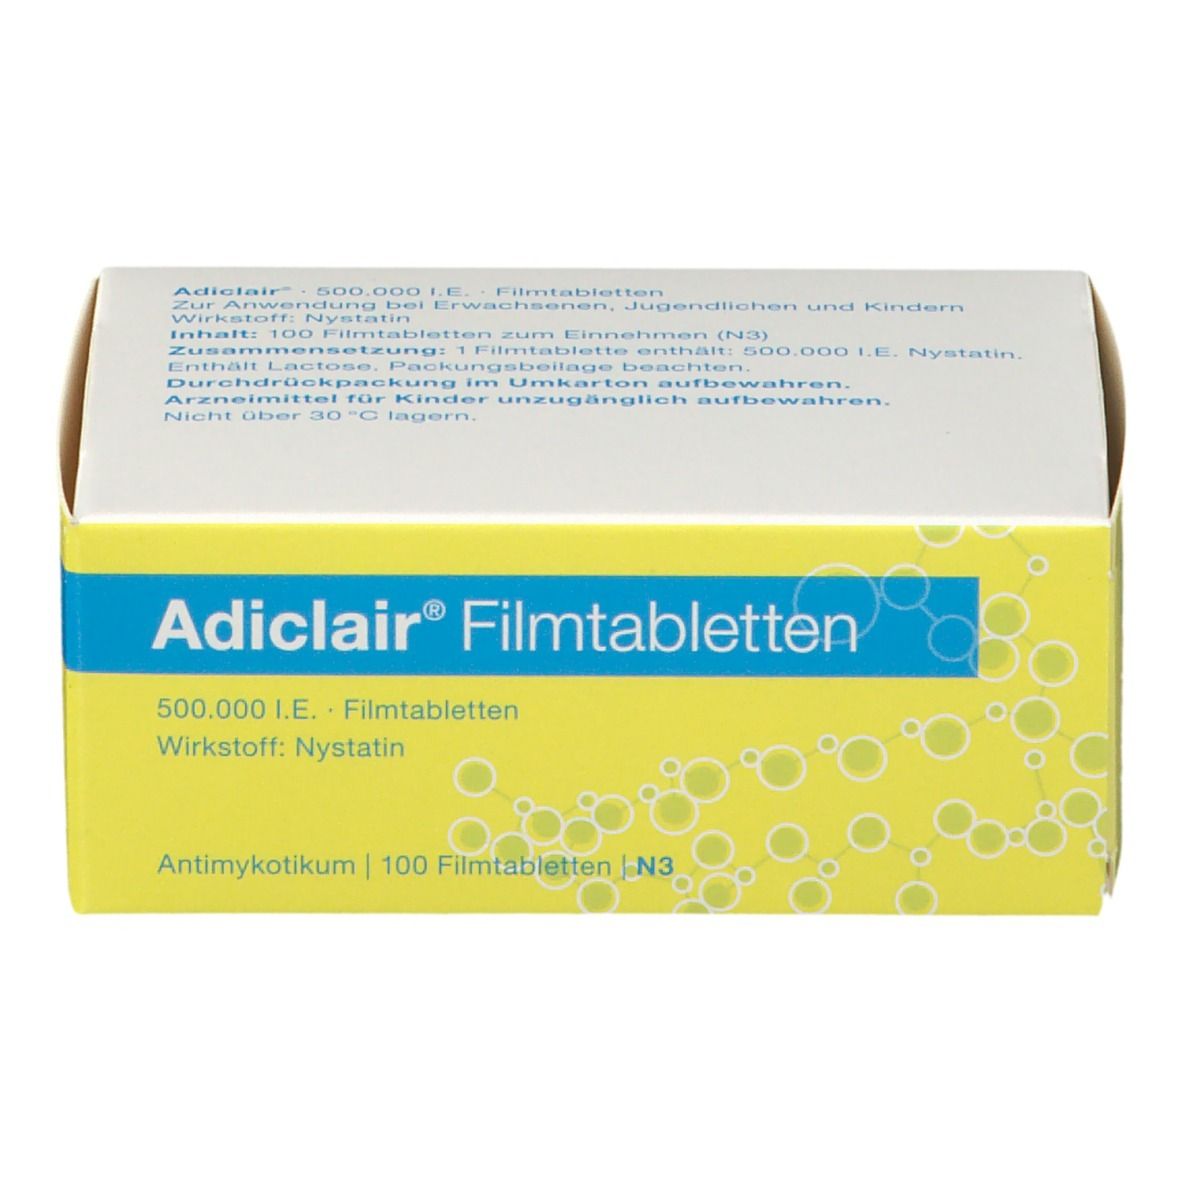 Adiclair® Filmtabletten 100 St - SHOP APOTHEKE